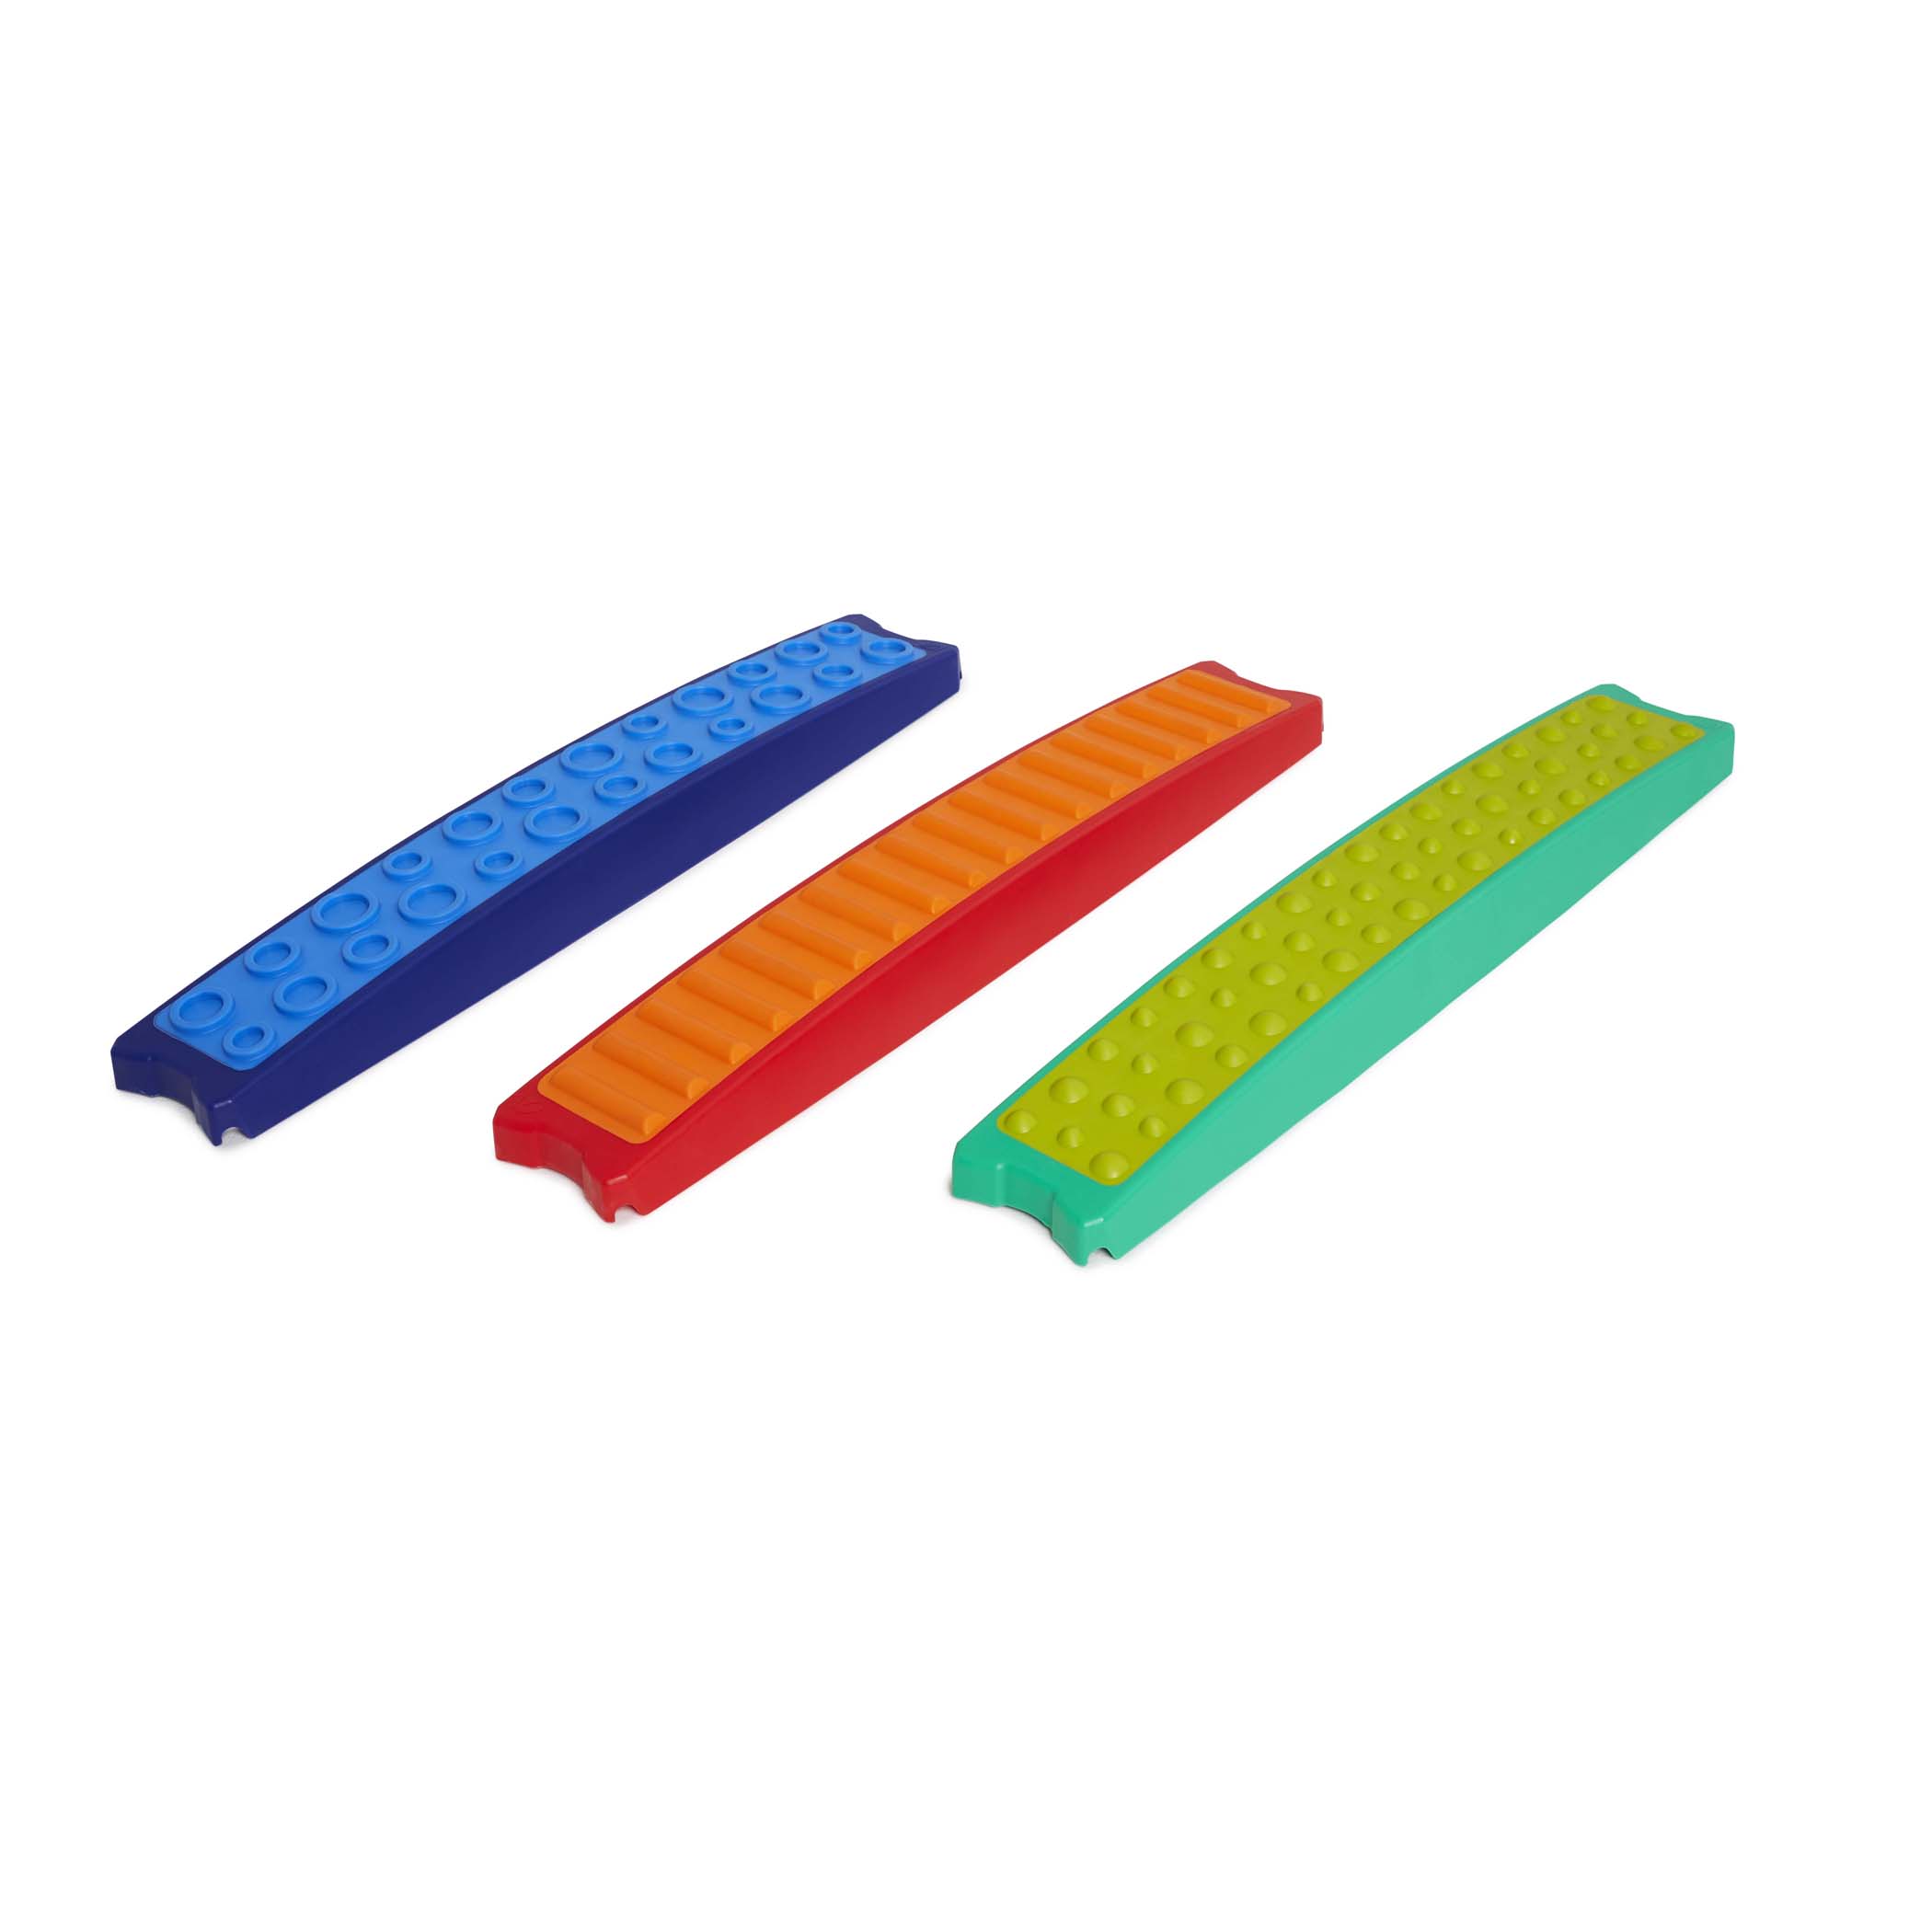 GONGE Build N' Balance Tactile Planks, Set of 3